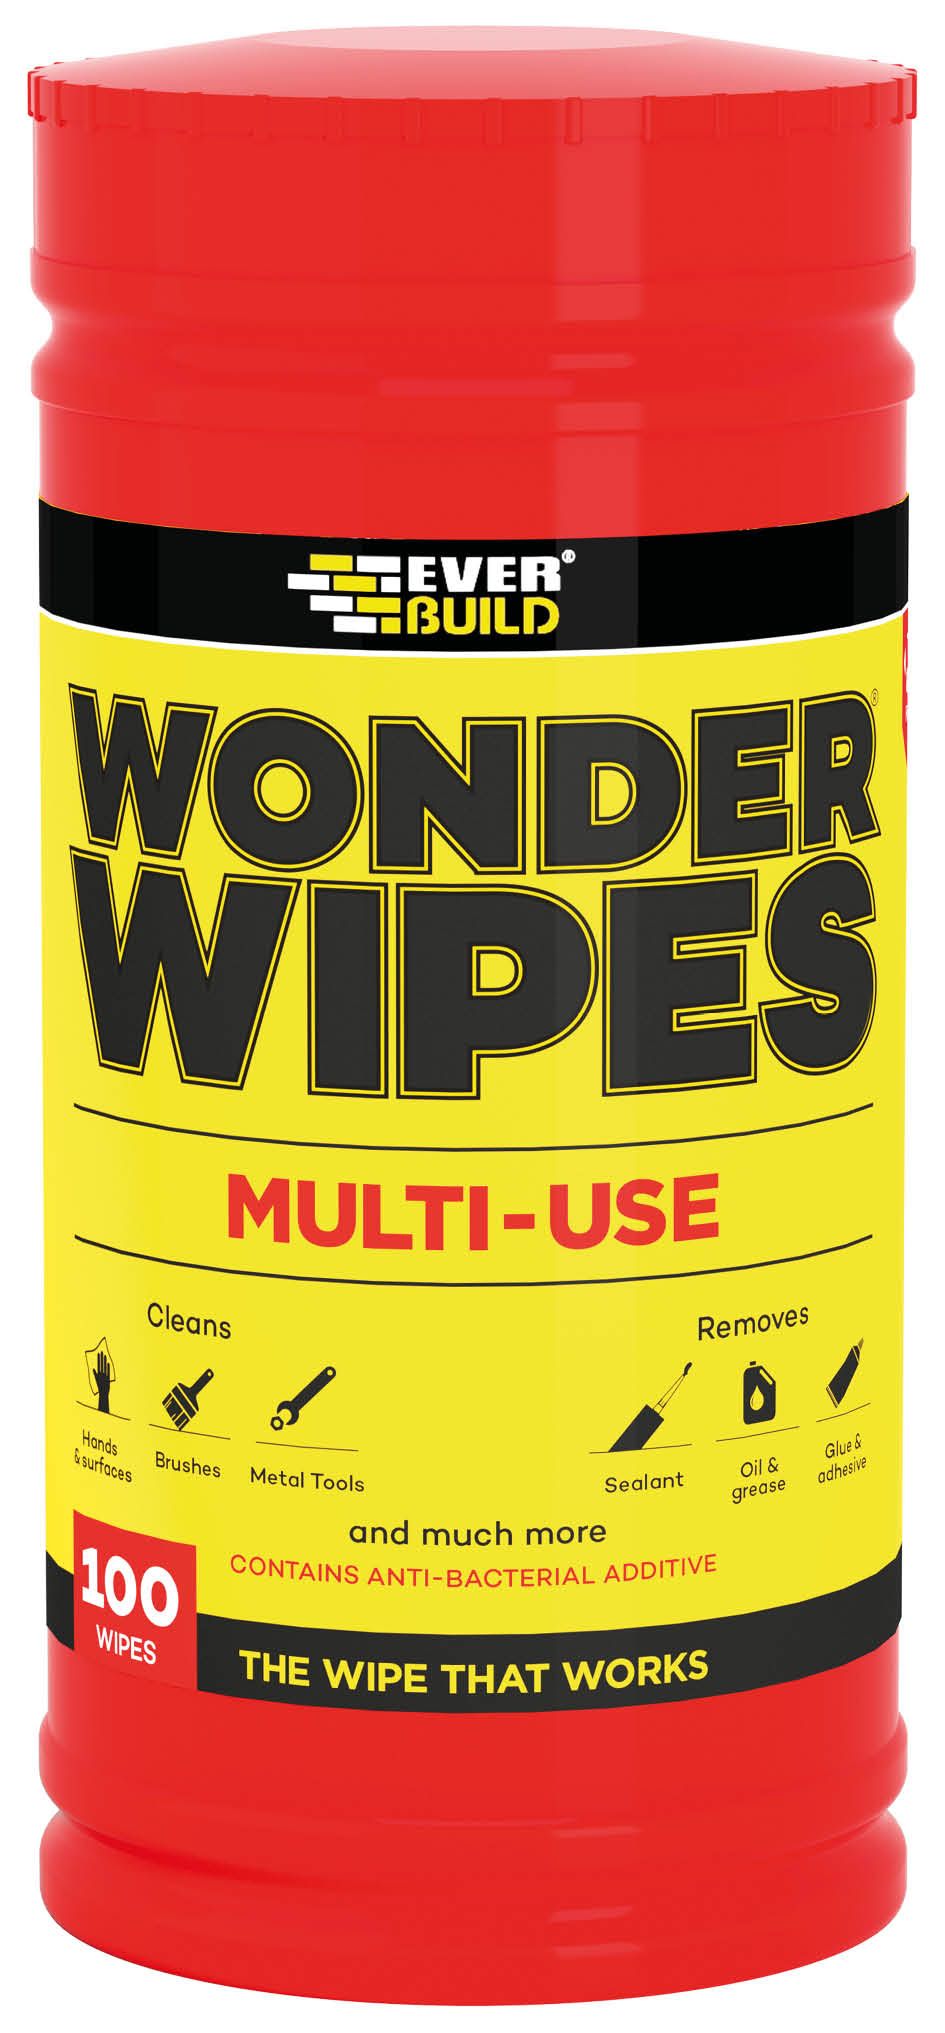 Everbuild Multi-Use Wonder Wipes - Pack of 100